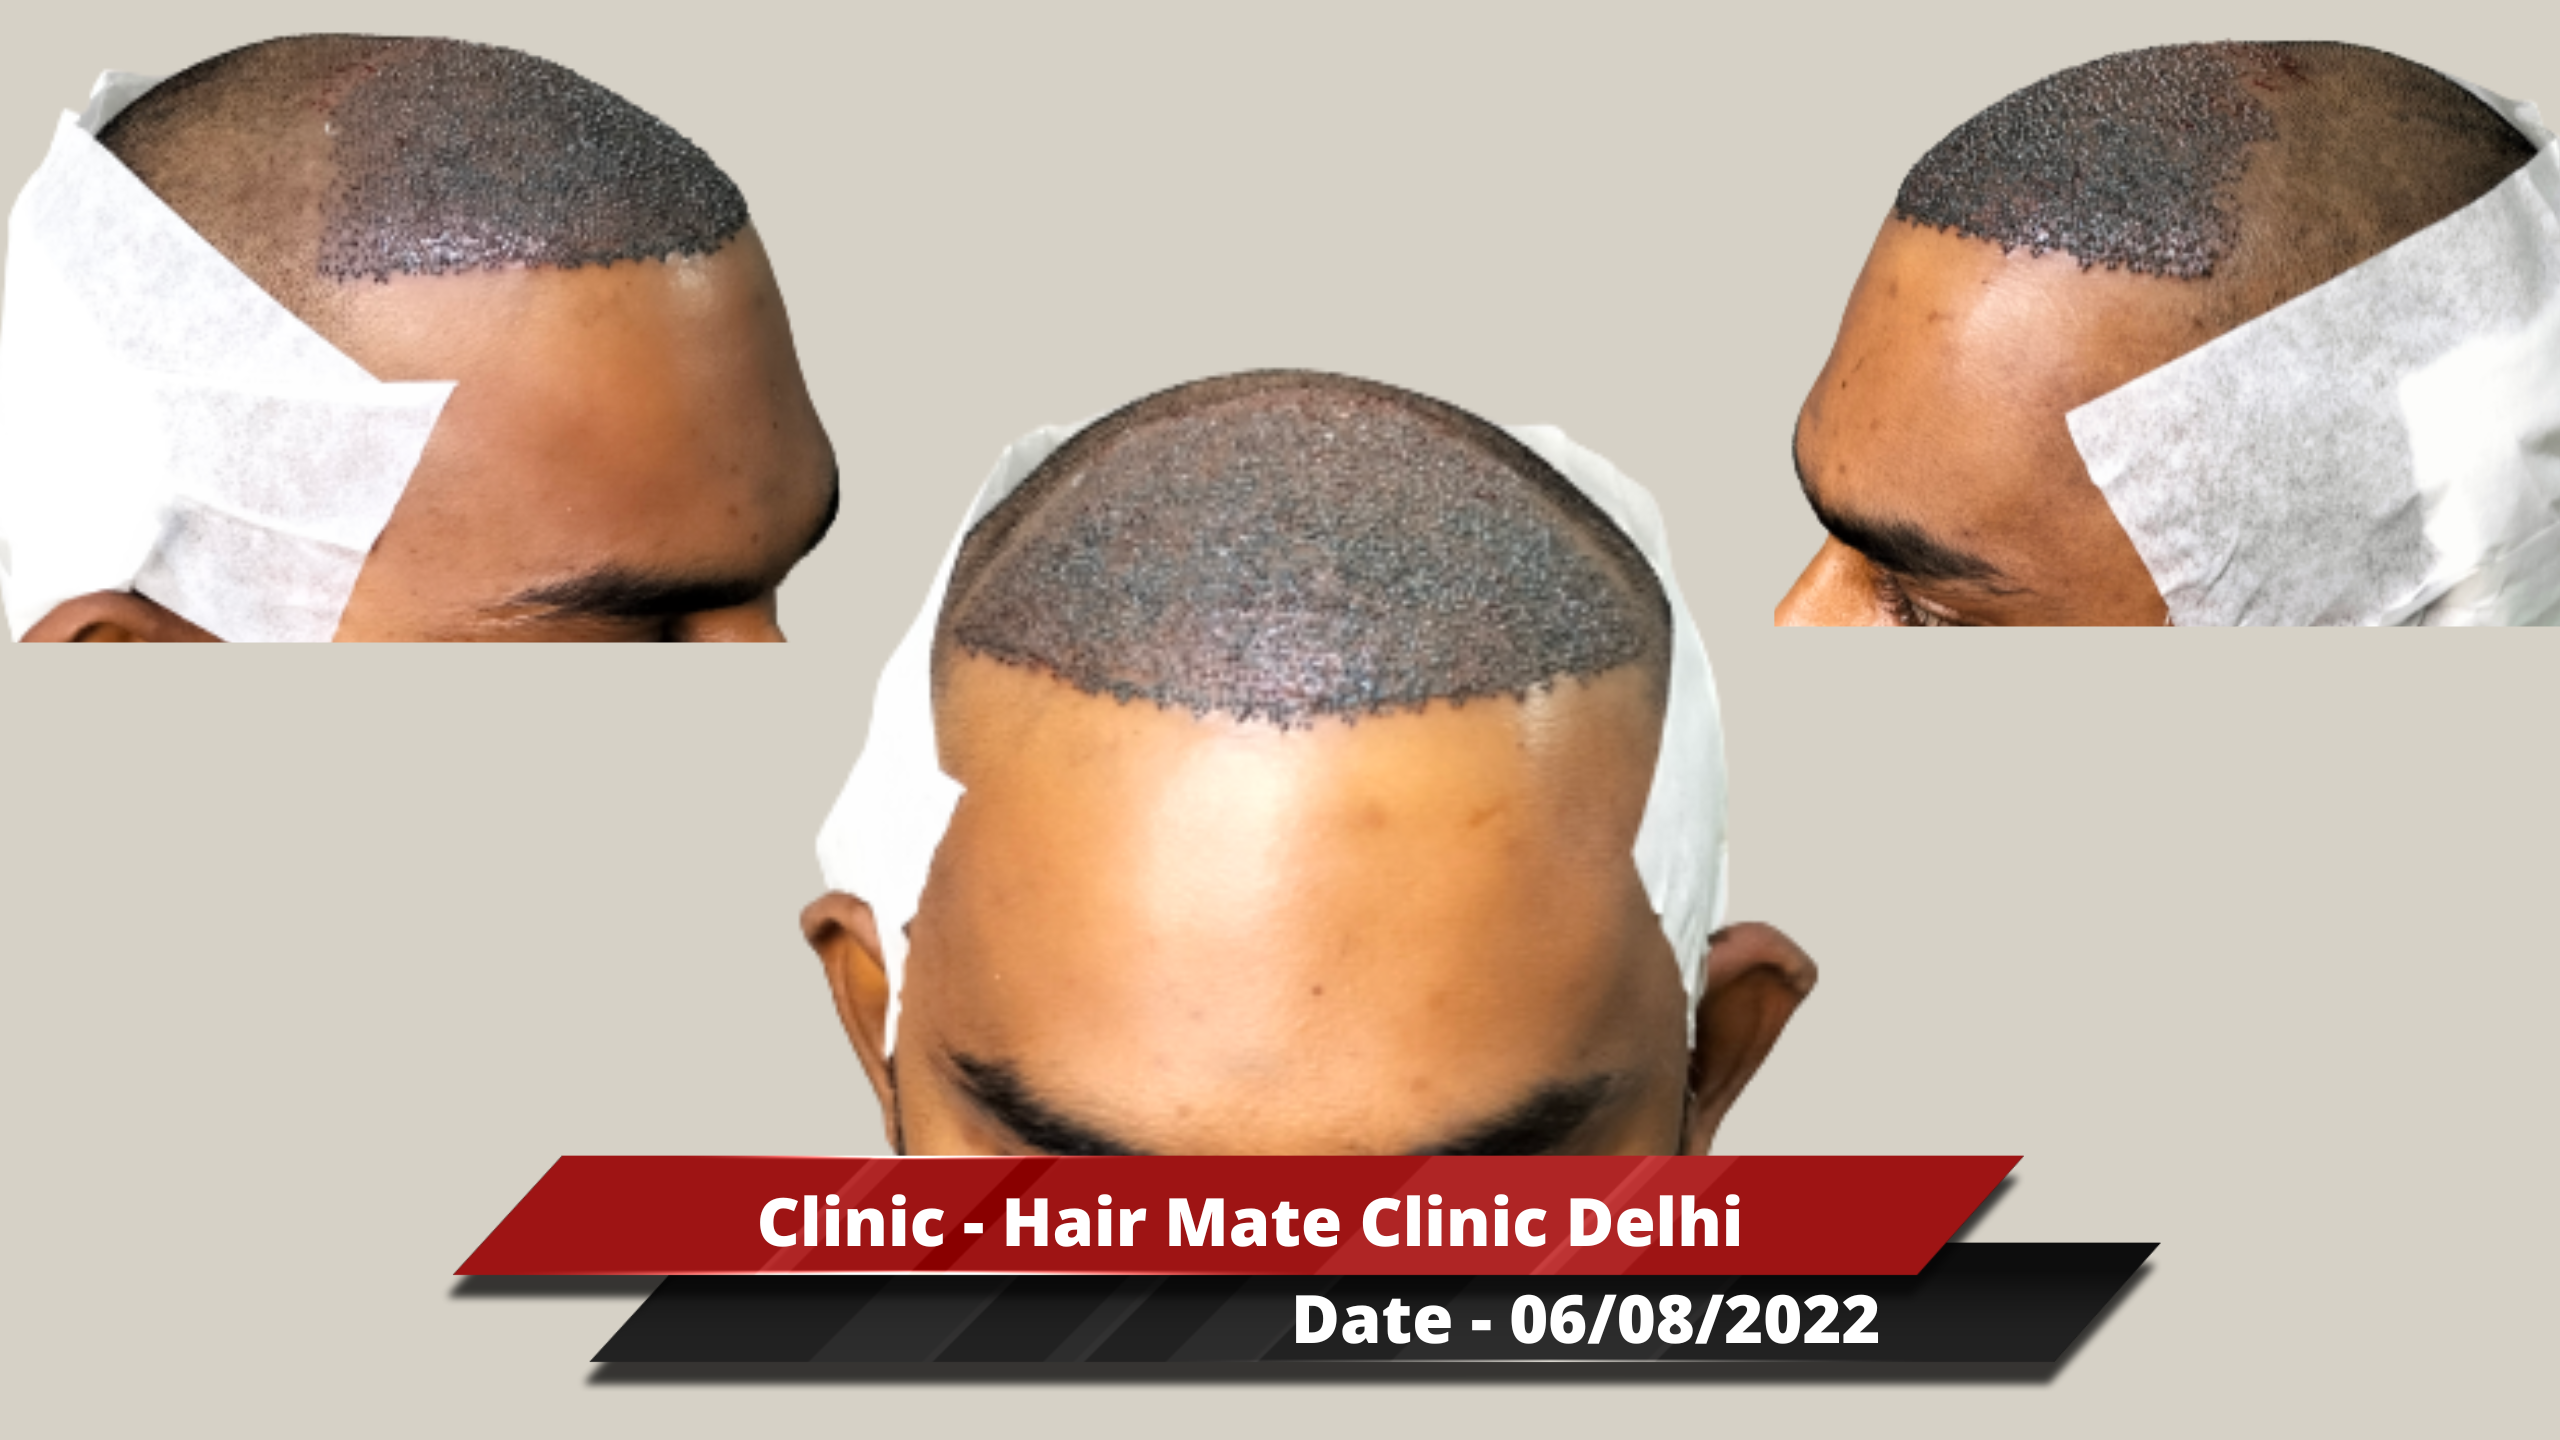 Hair Transplant from Delhi Clinic – 3500 Grafts – Best Hair Help